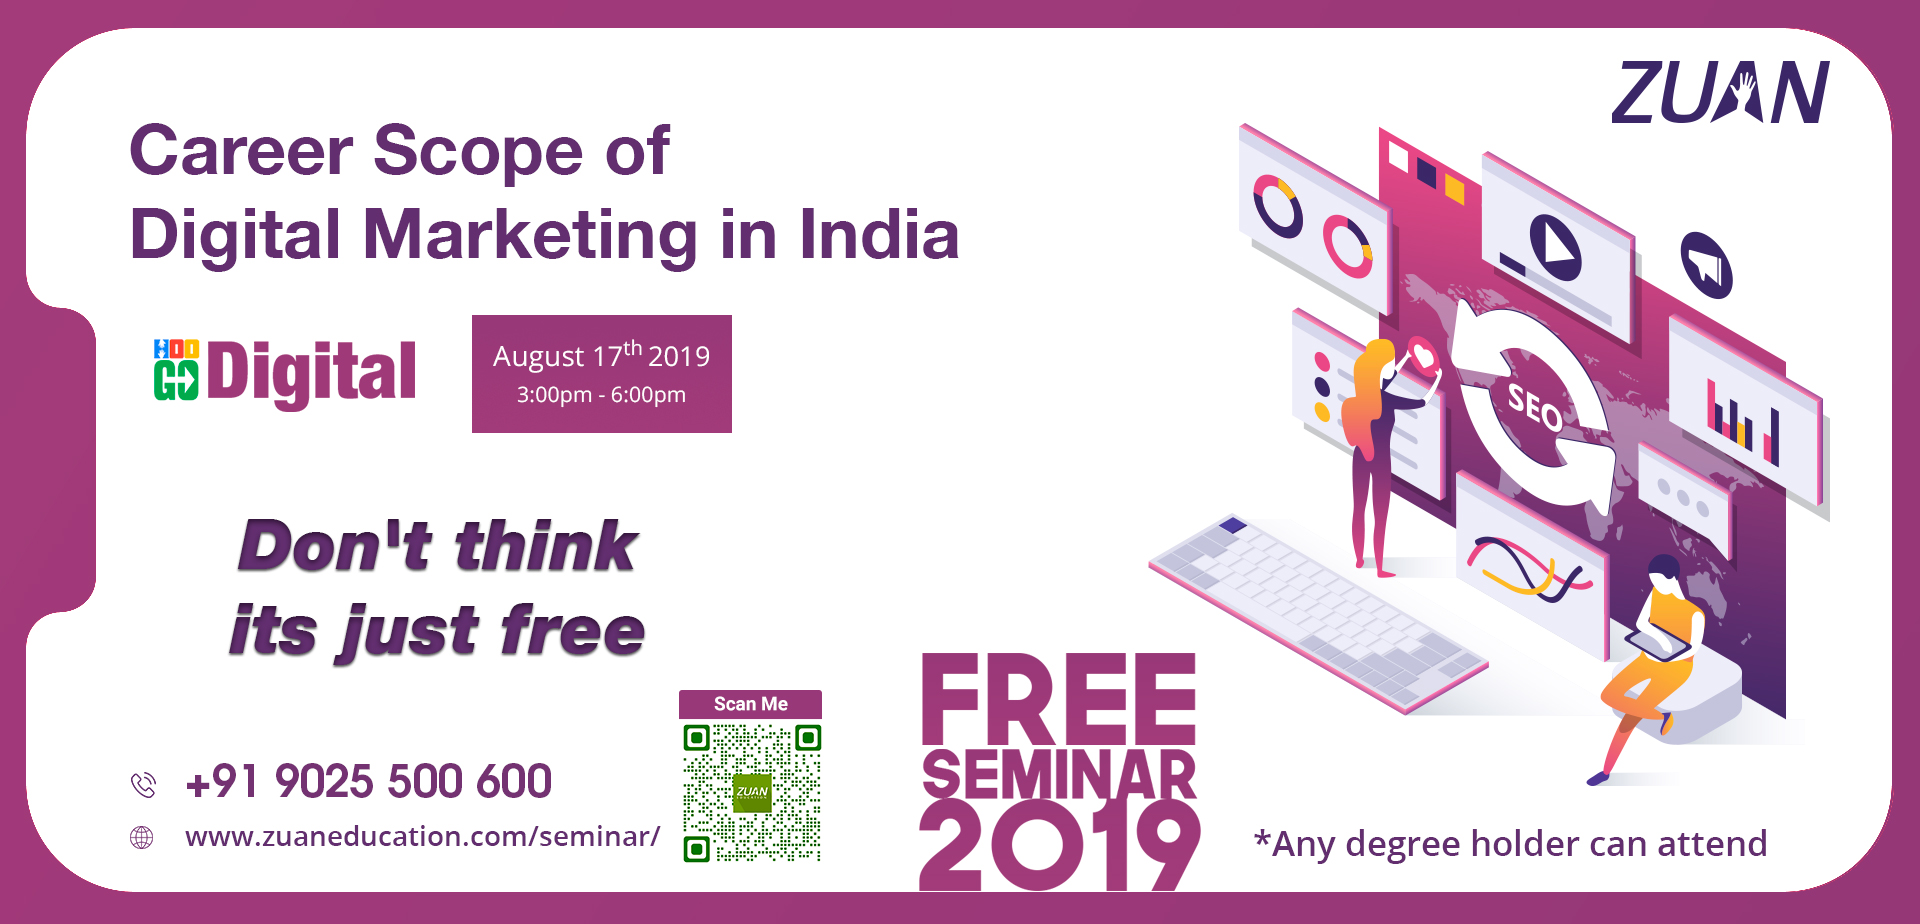 Career Scope of Digital Marketing in India, Chennai, Tamil Nadu, India